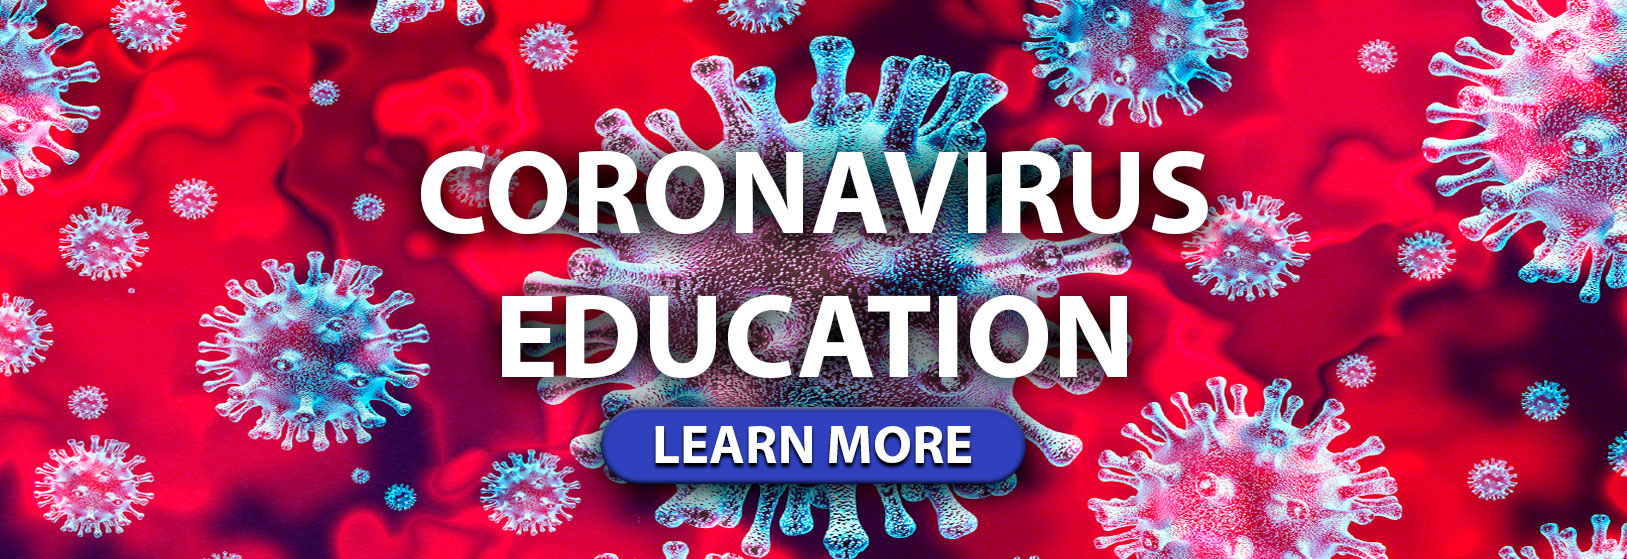 Coronavirus Education Learn More.